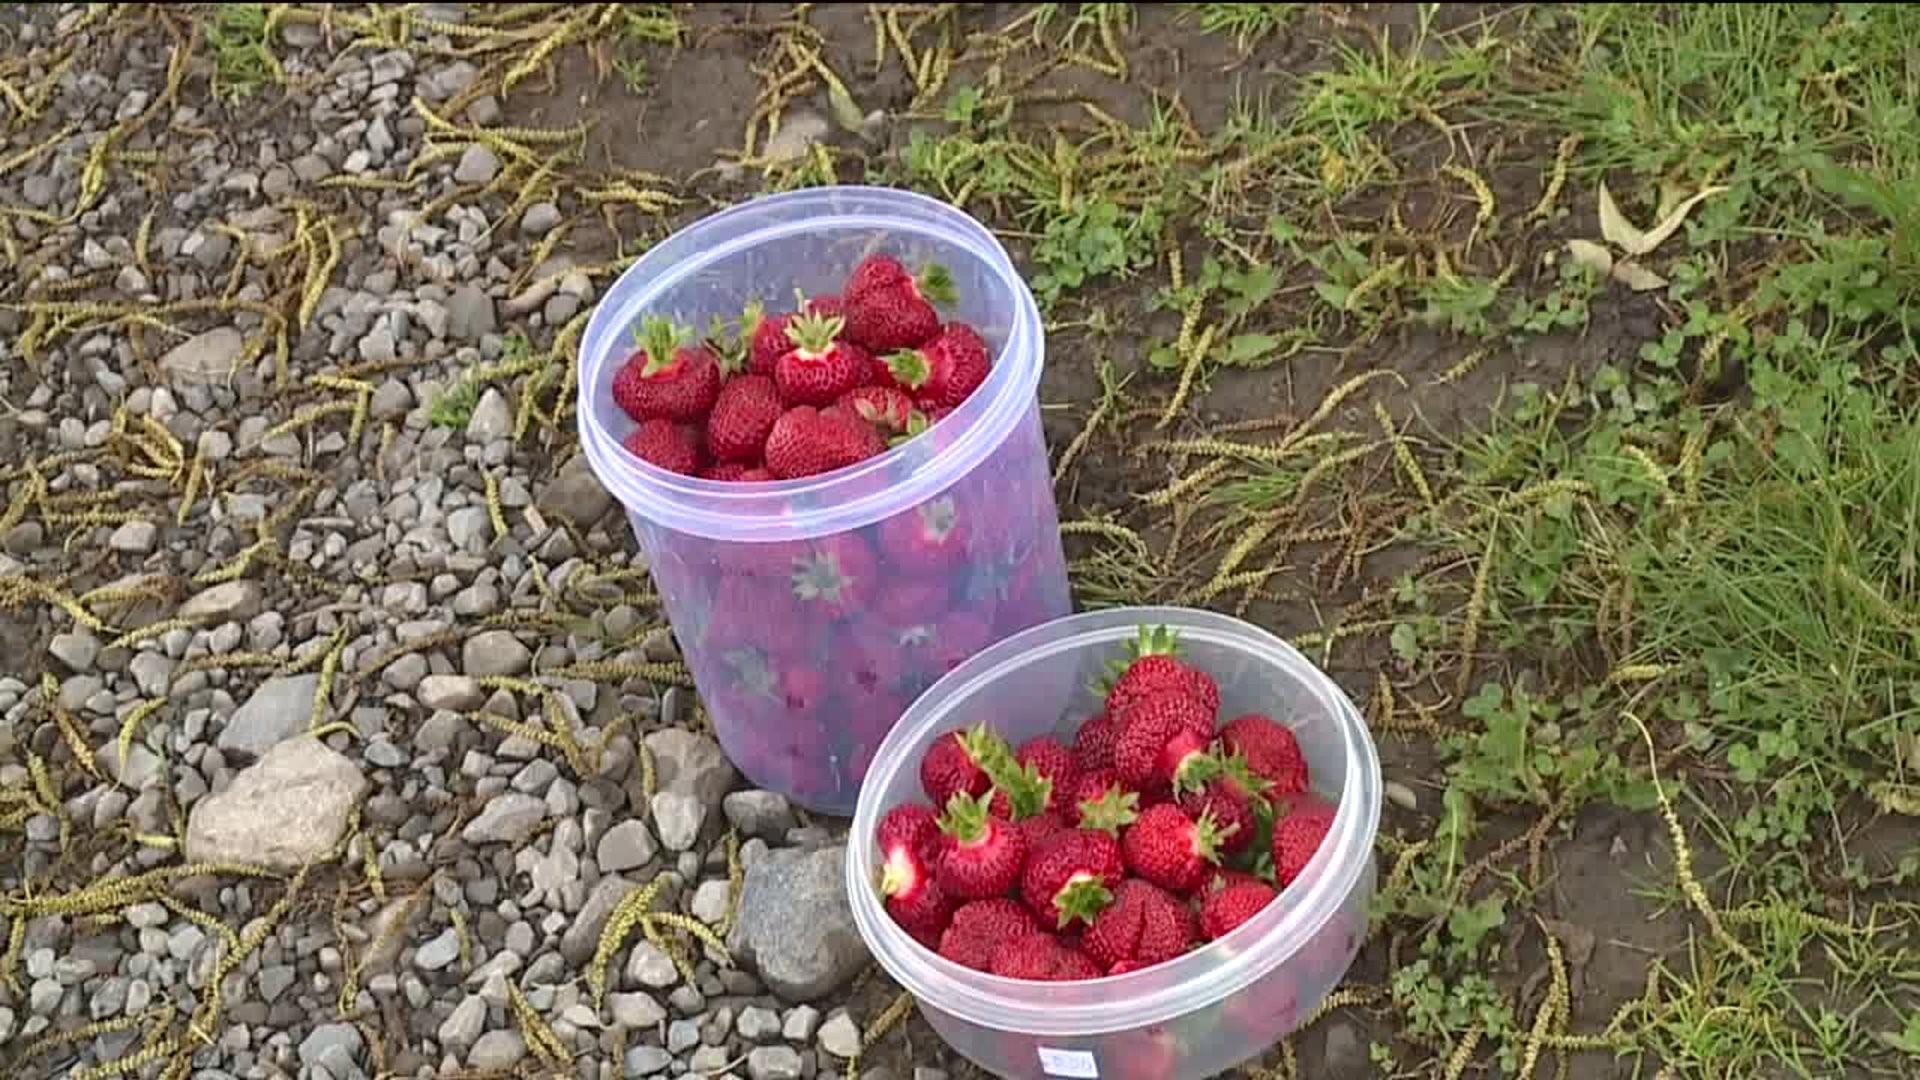 Strawberry Season Is Underway!